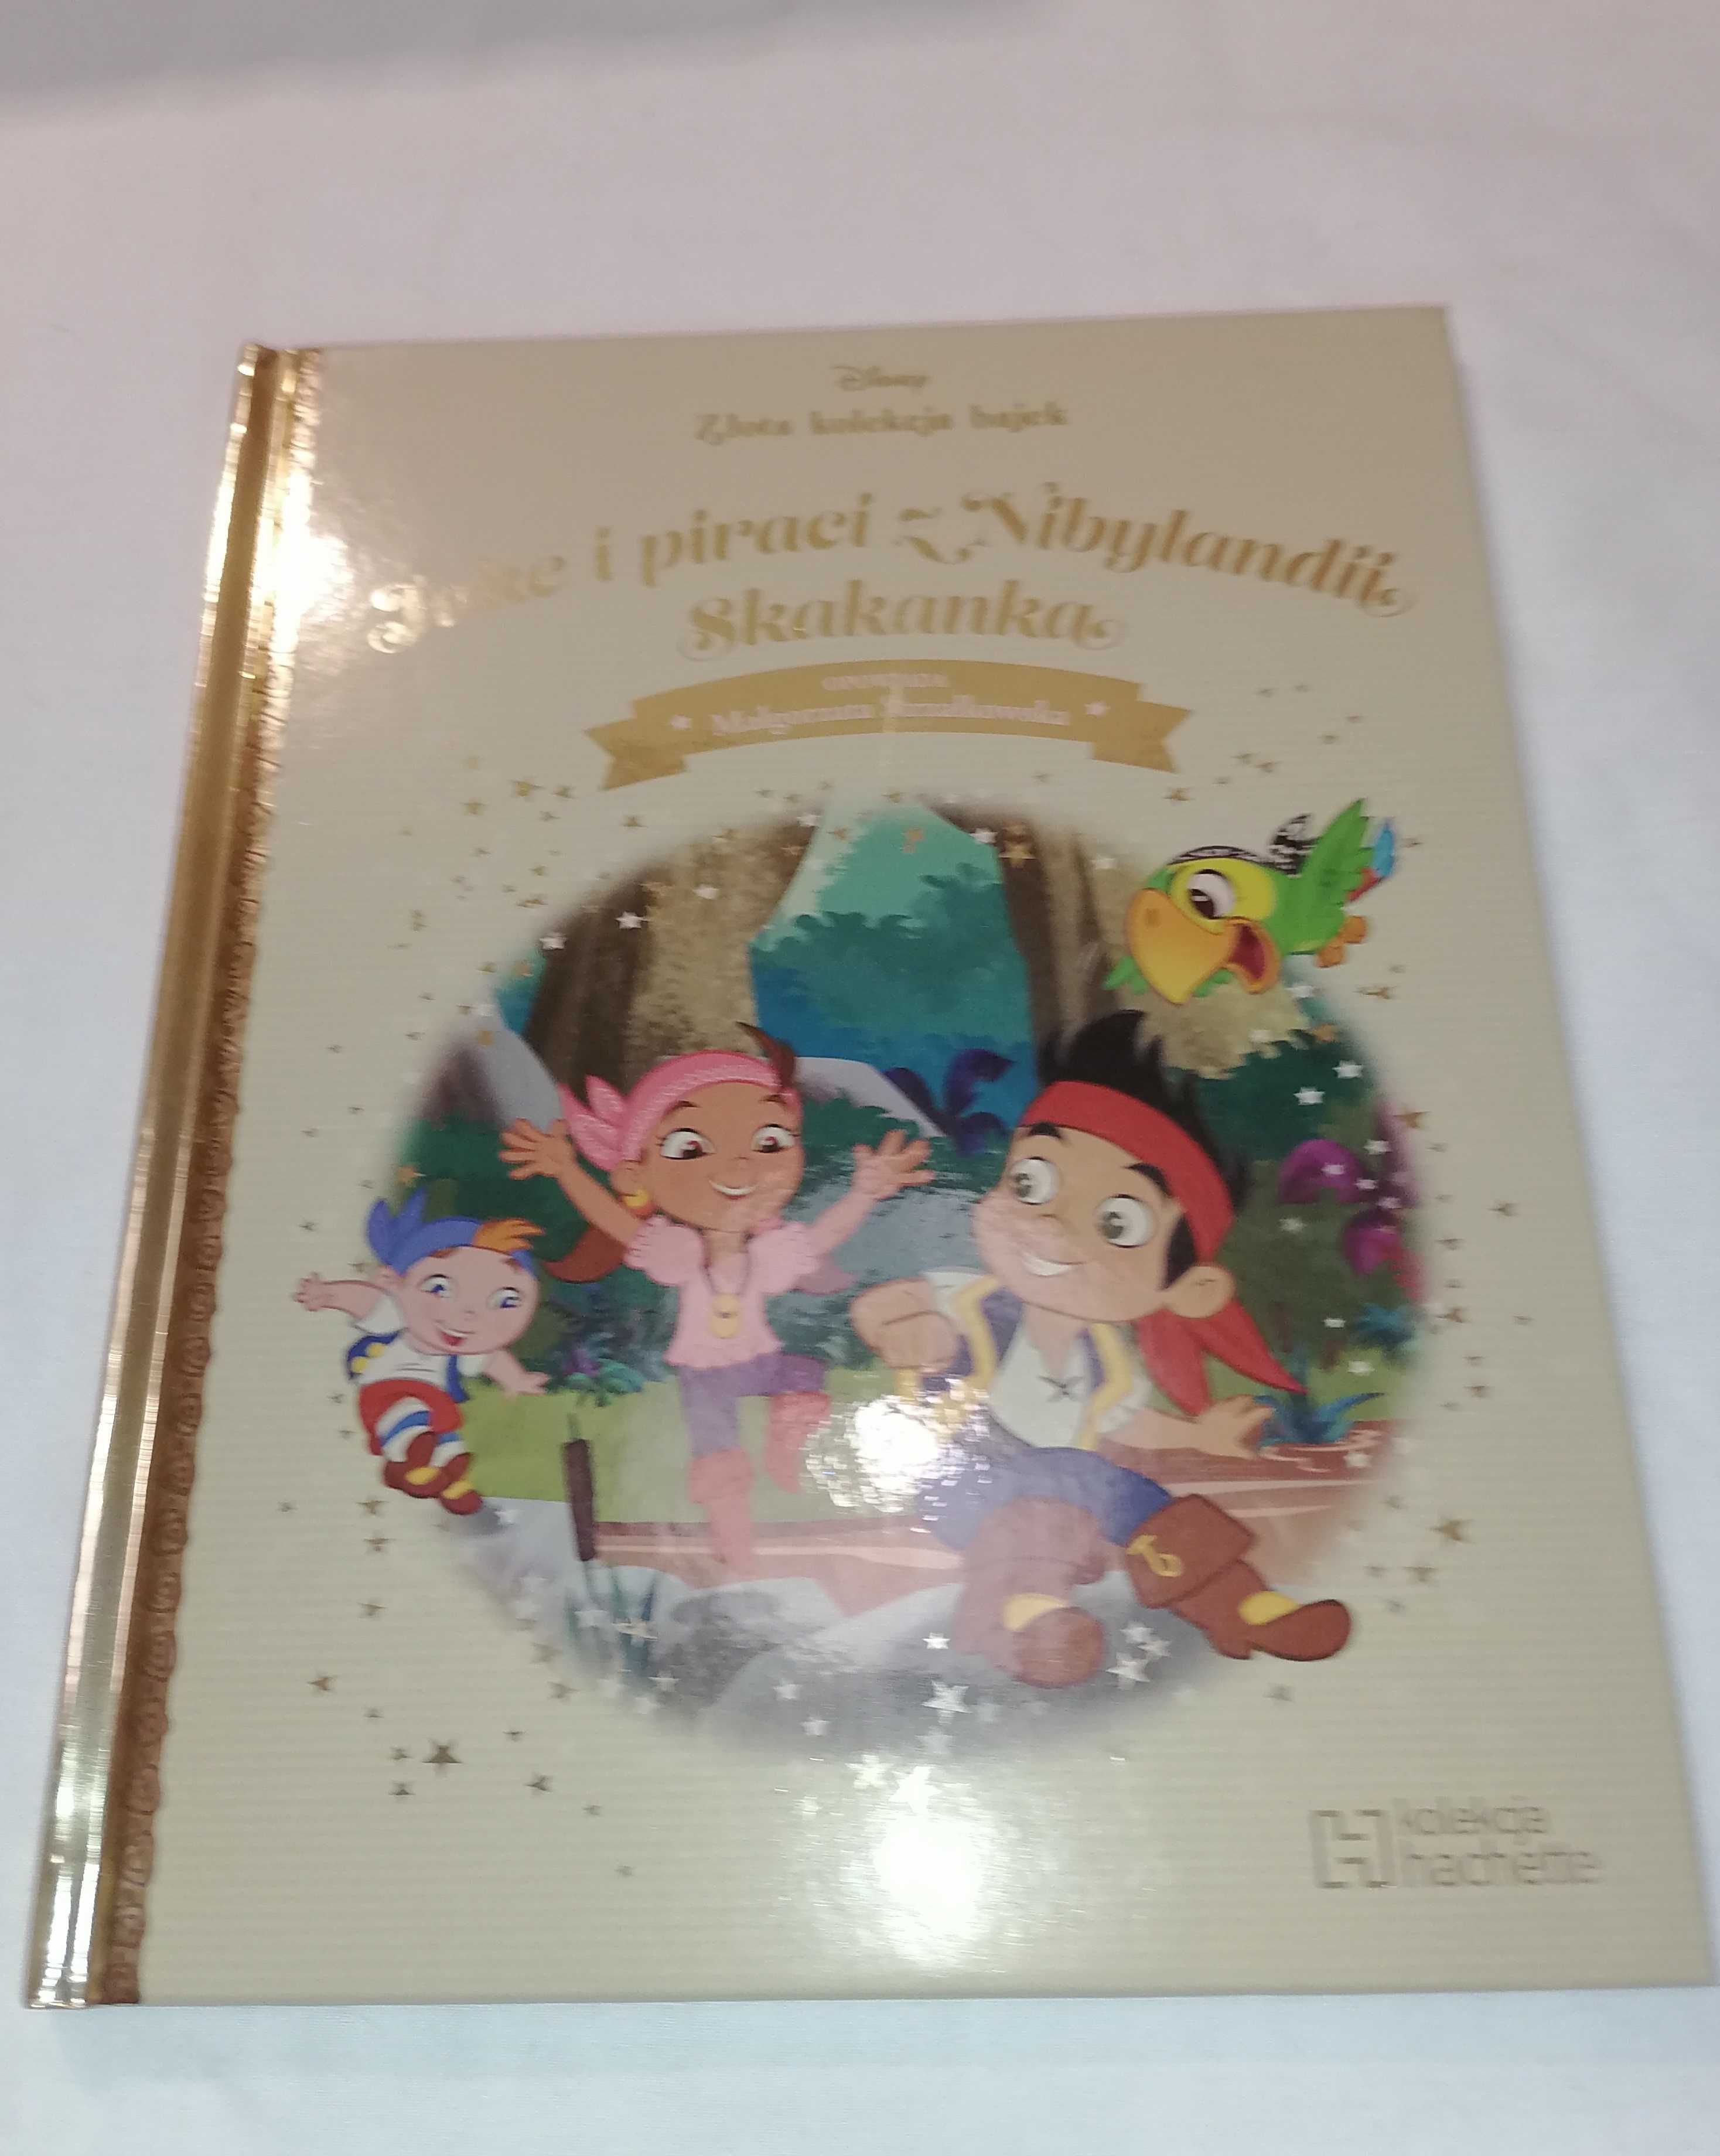 Jake i piraci z Nibylandii Skakanka (tom 20) – złota kolekcja bajek